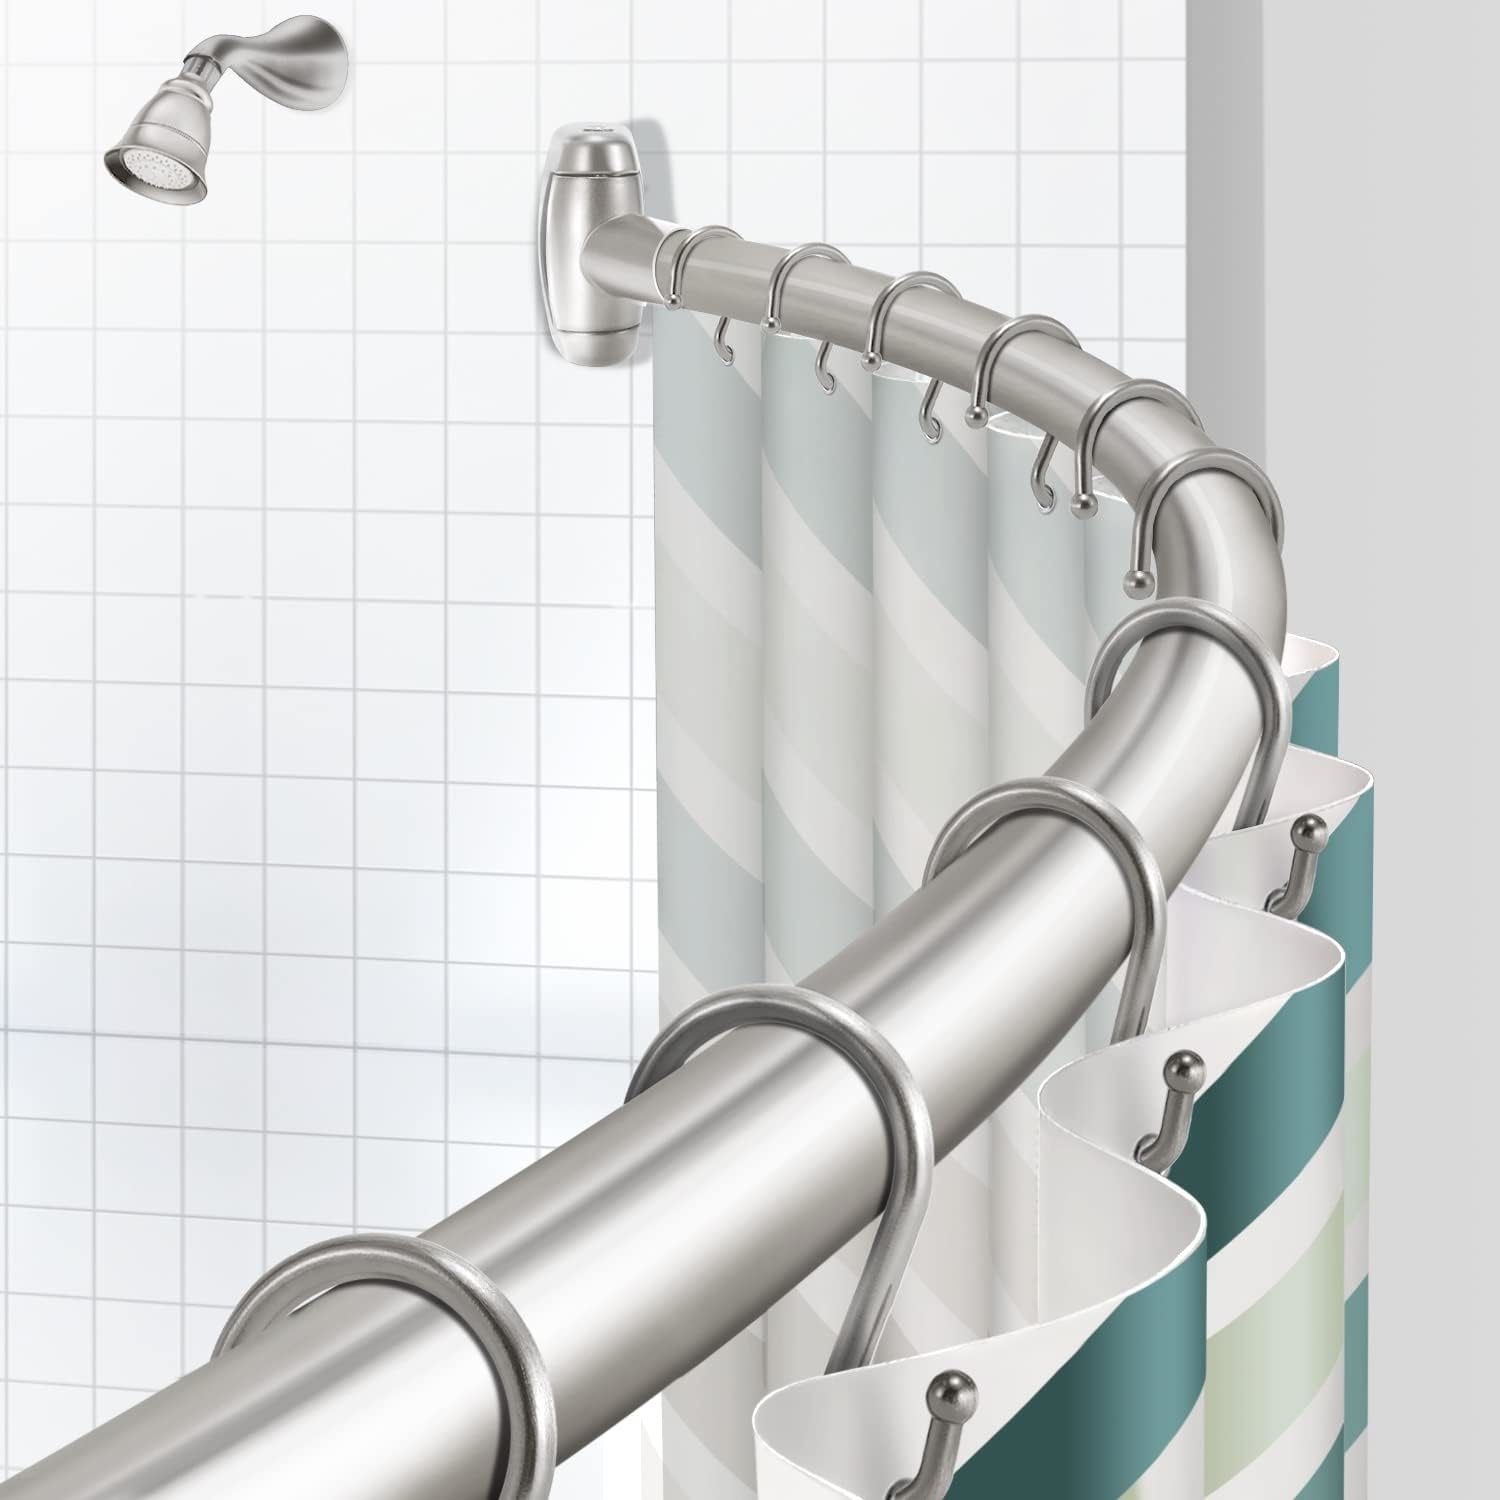 Illustration of a curved shower rod